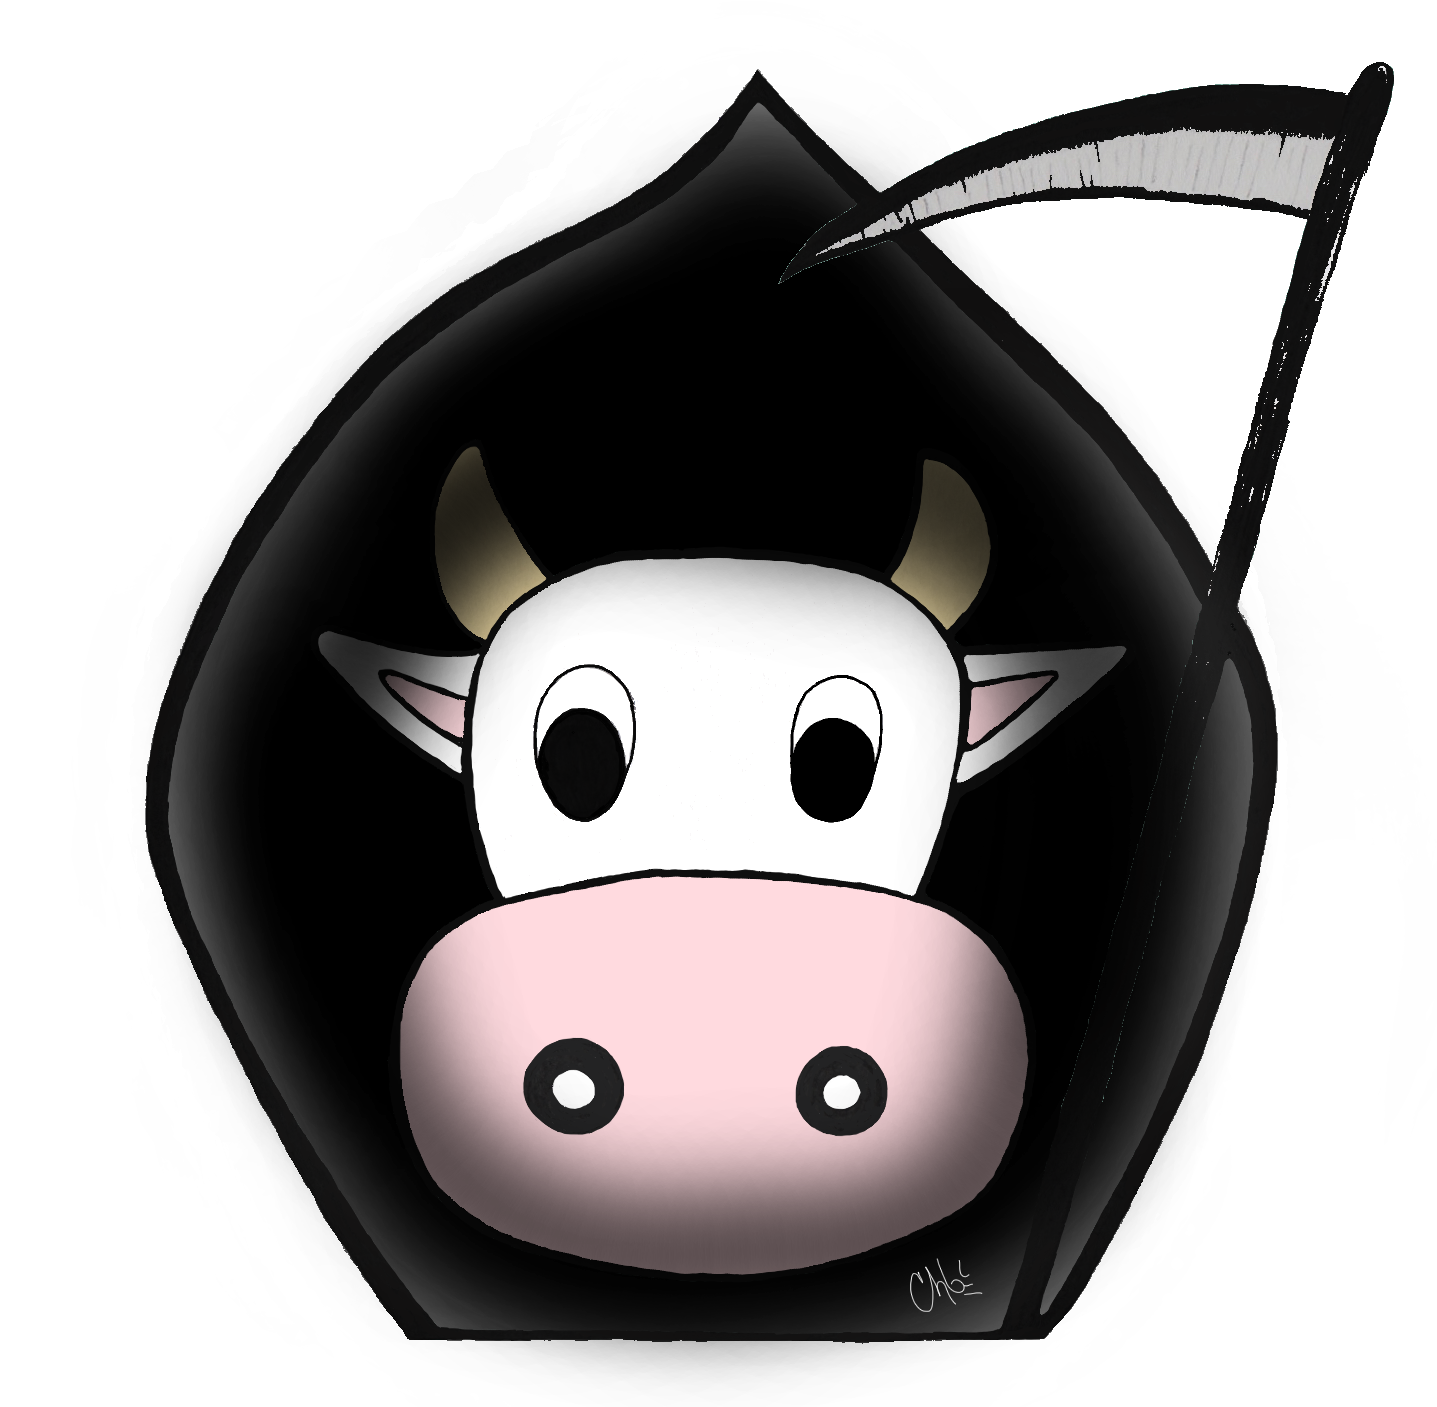 Emoji style cow head with hood and scythe like a grim reaper